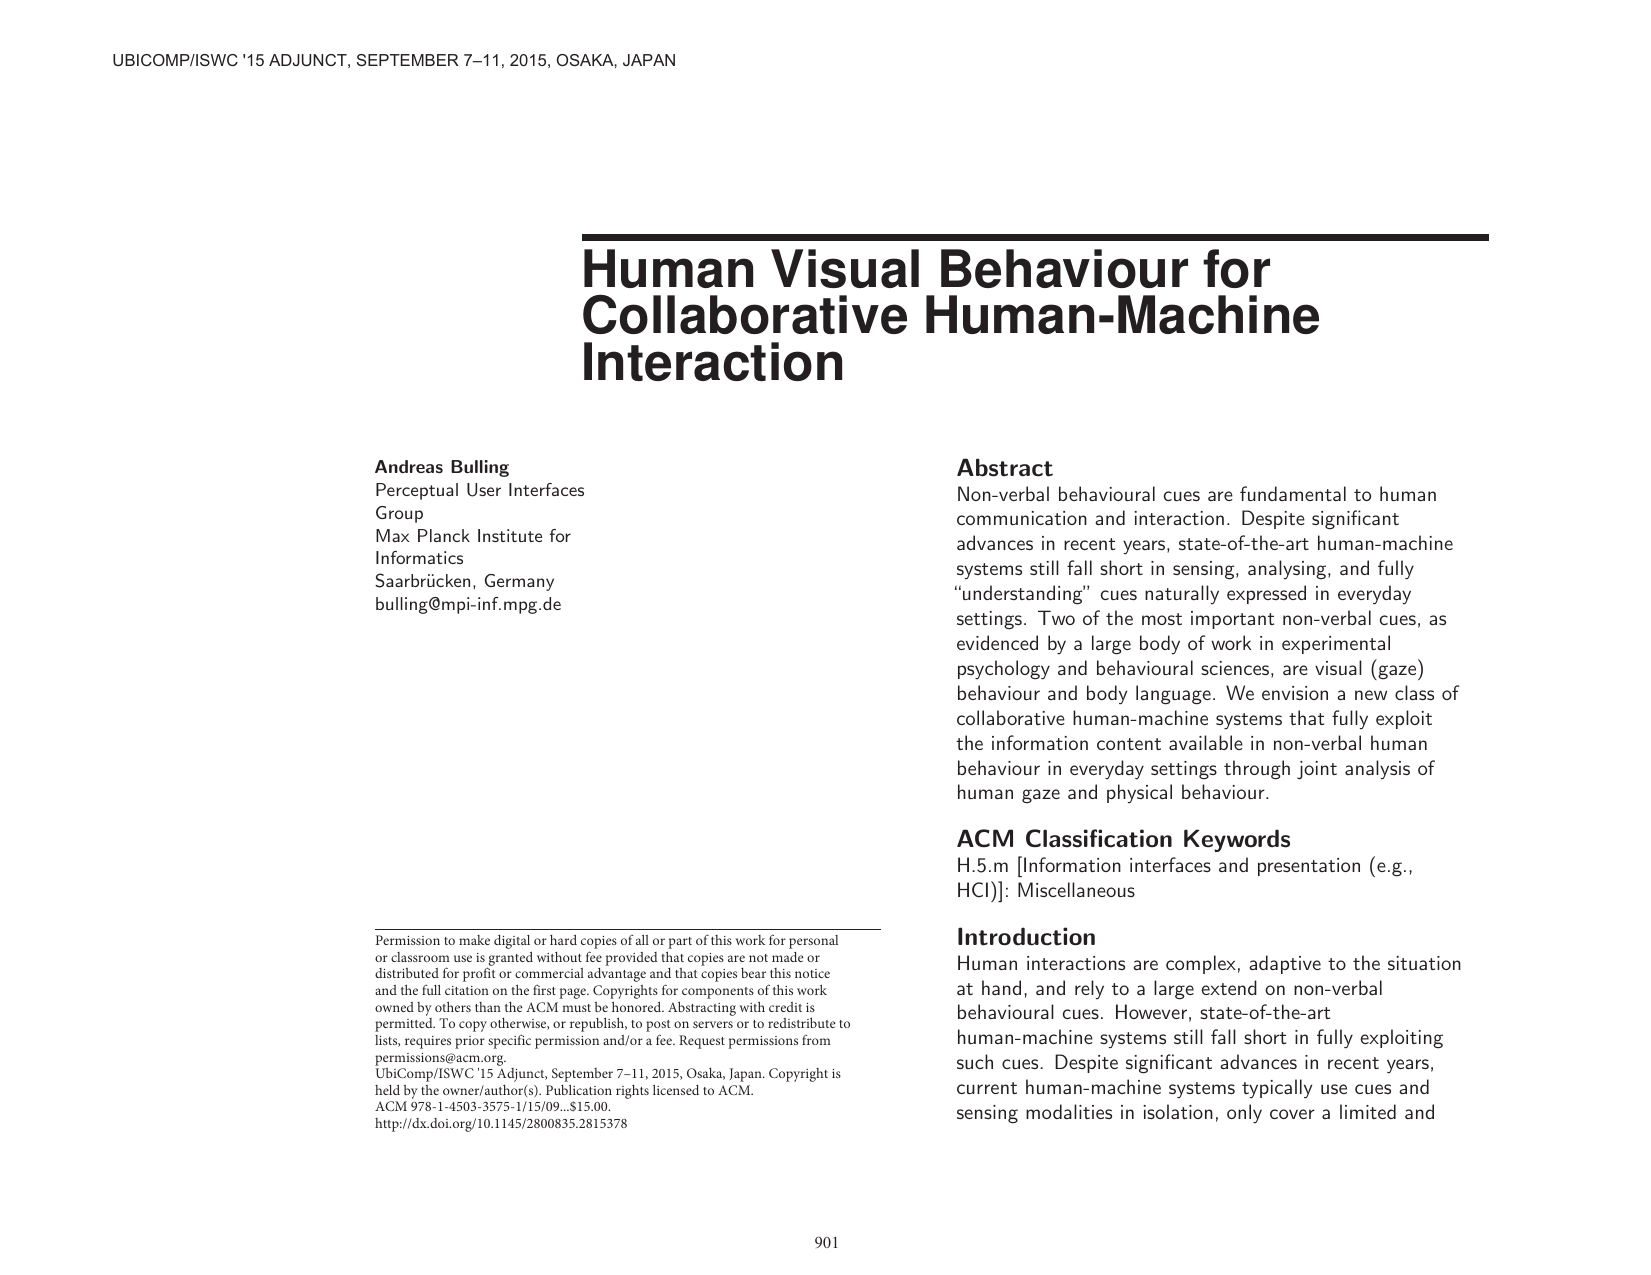 Human Visual Behaviour for Collaborative Human-Machine Interaction